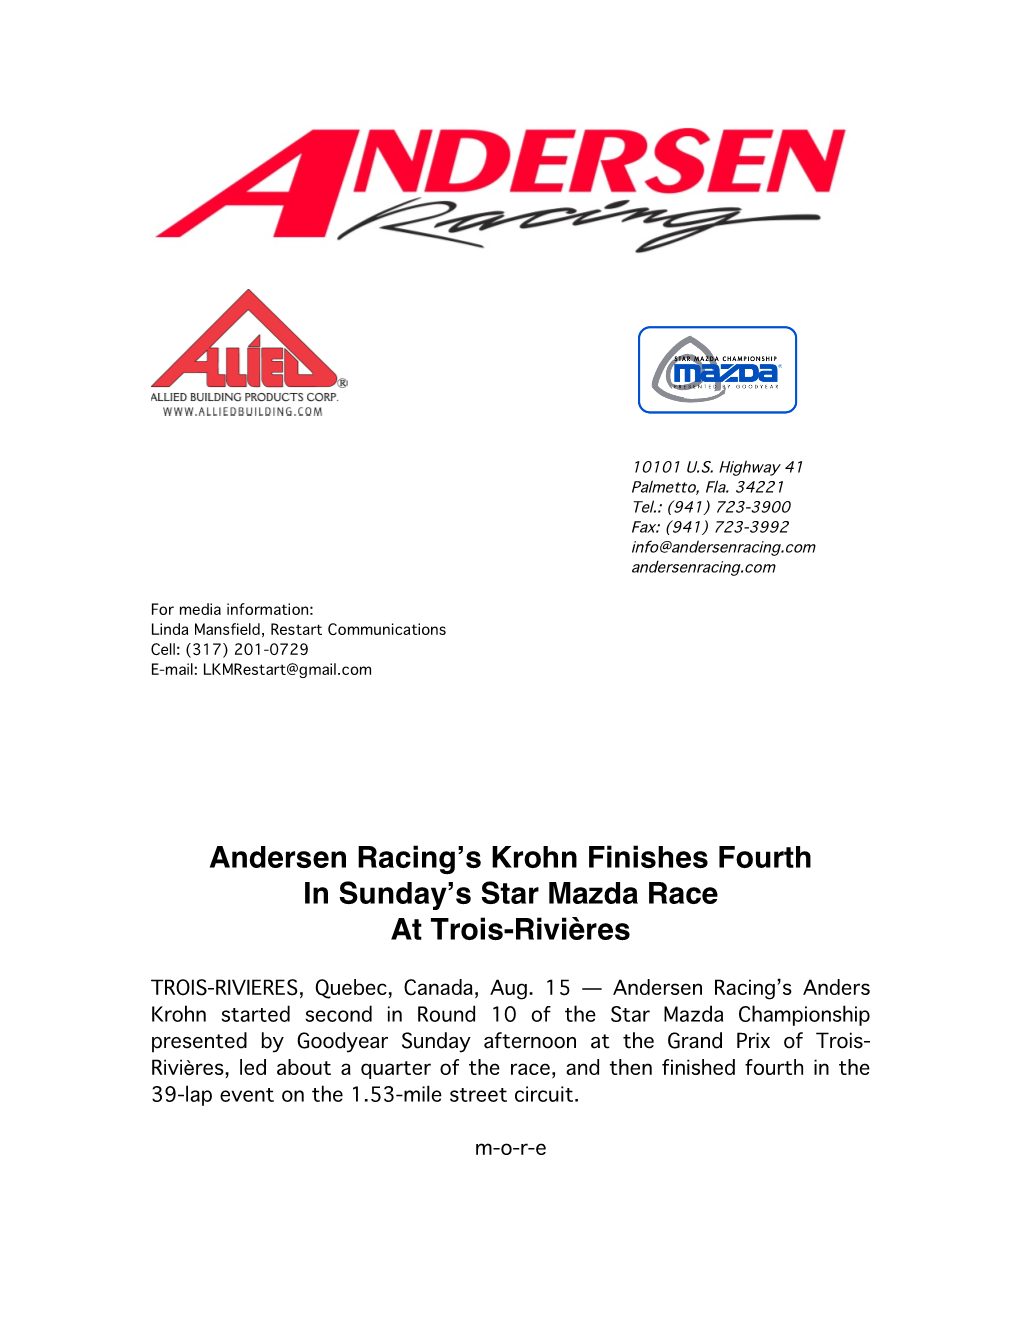 Andersen Racing's Krohn Finishes Fourth in Sunday's Star Mazda